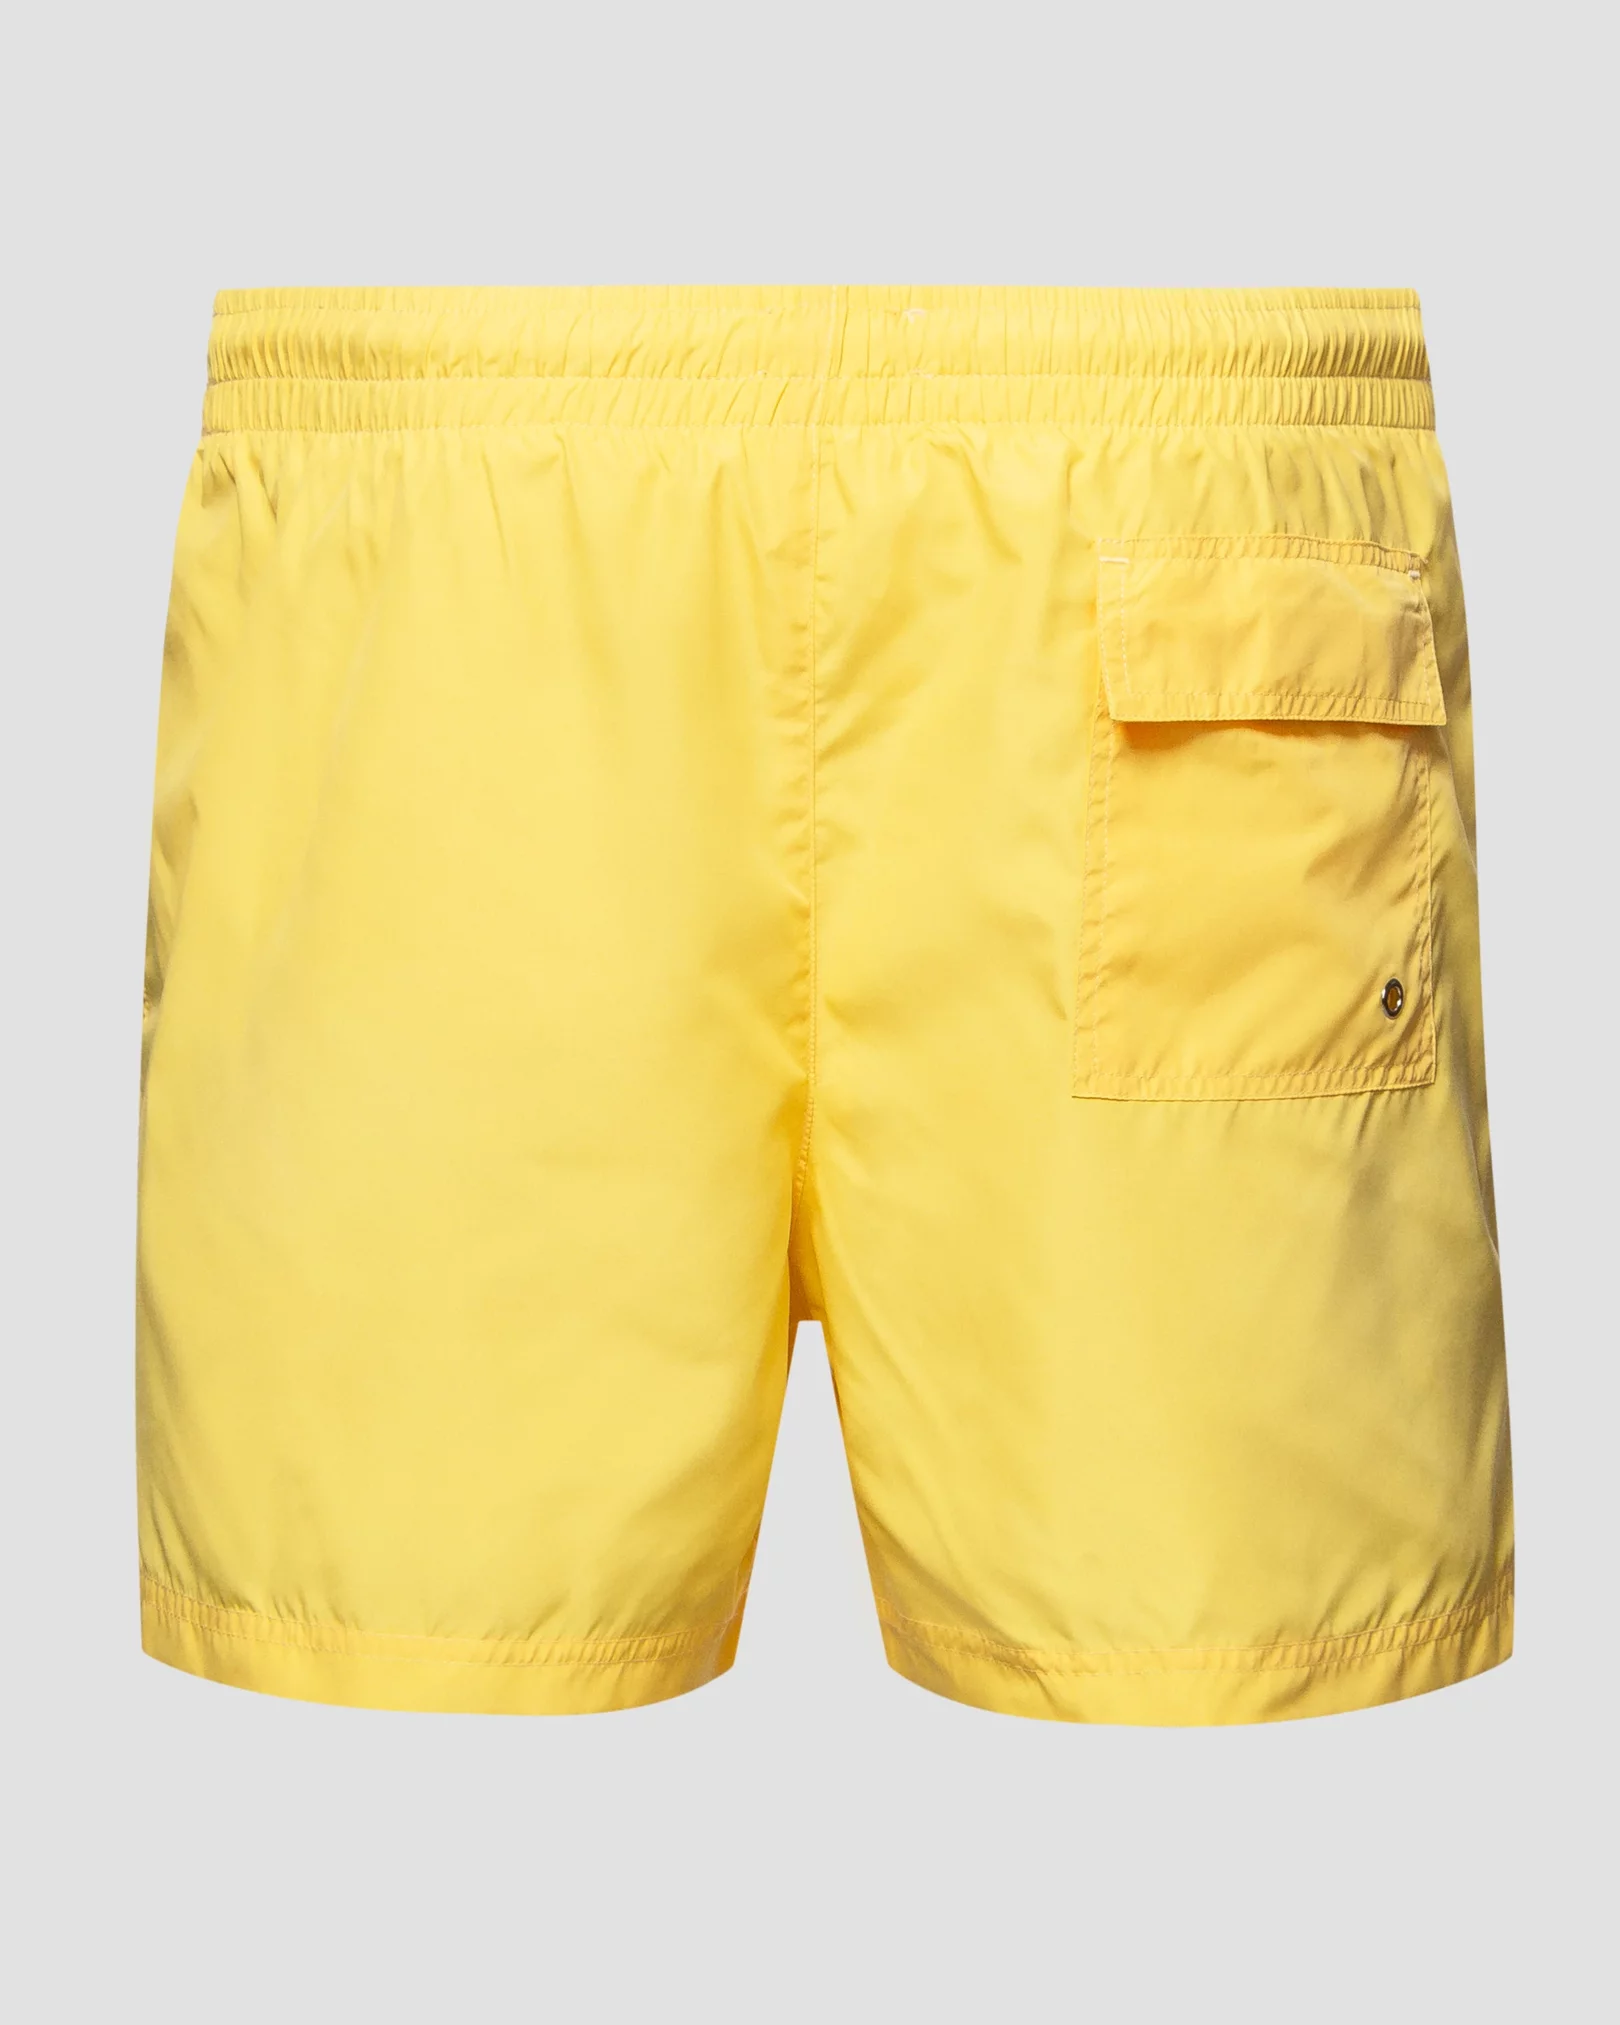 Eton - yellow swimshorts